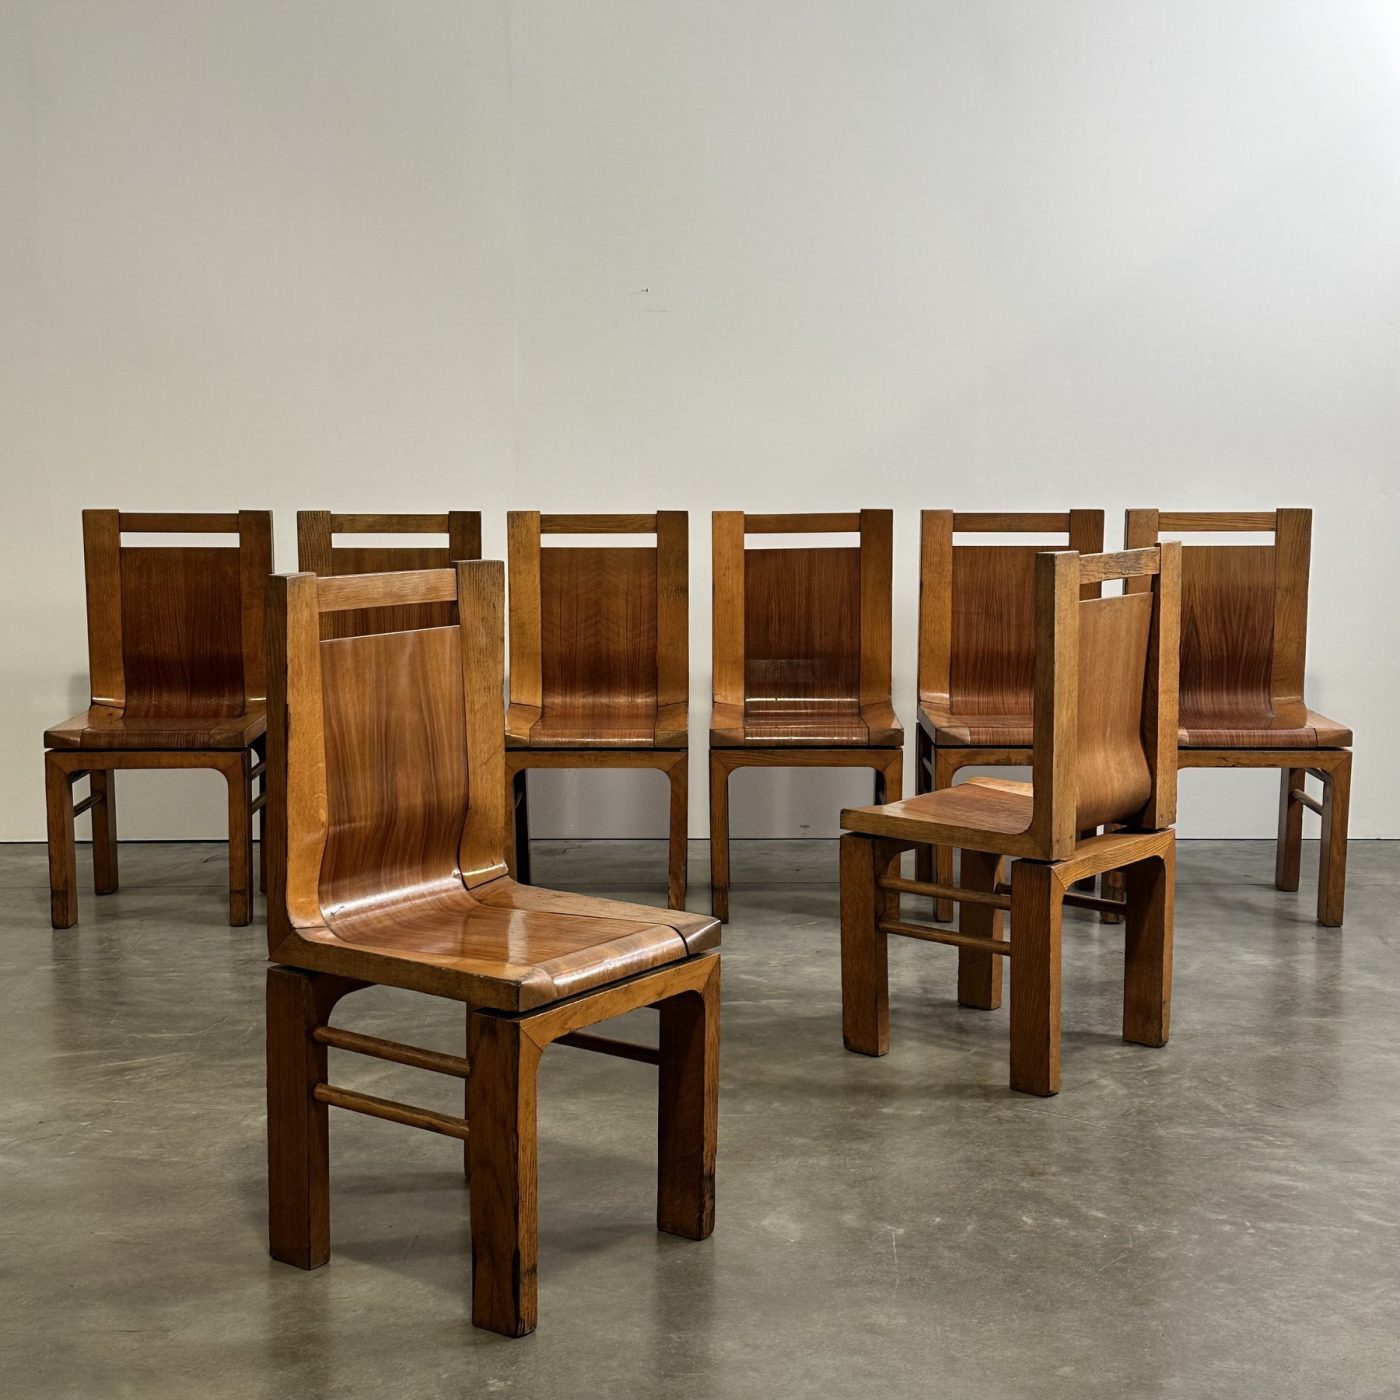 objet-vagabond-brutalist-chairs0000